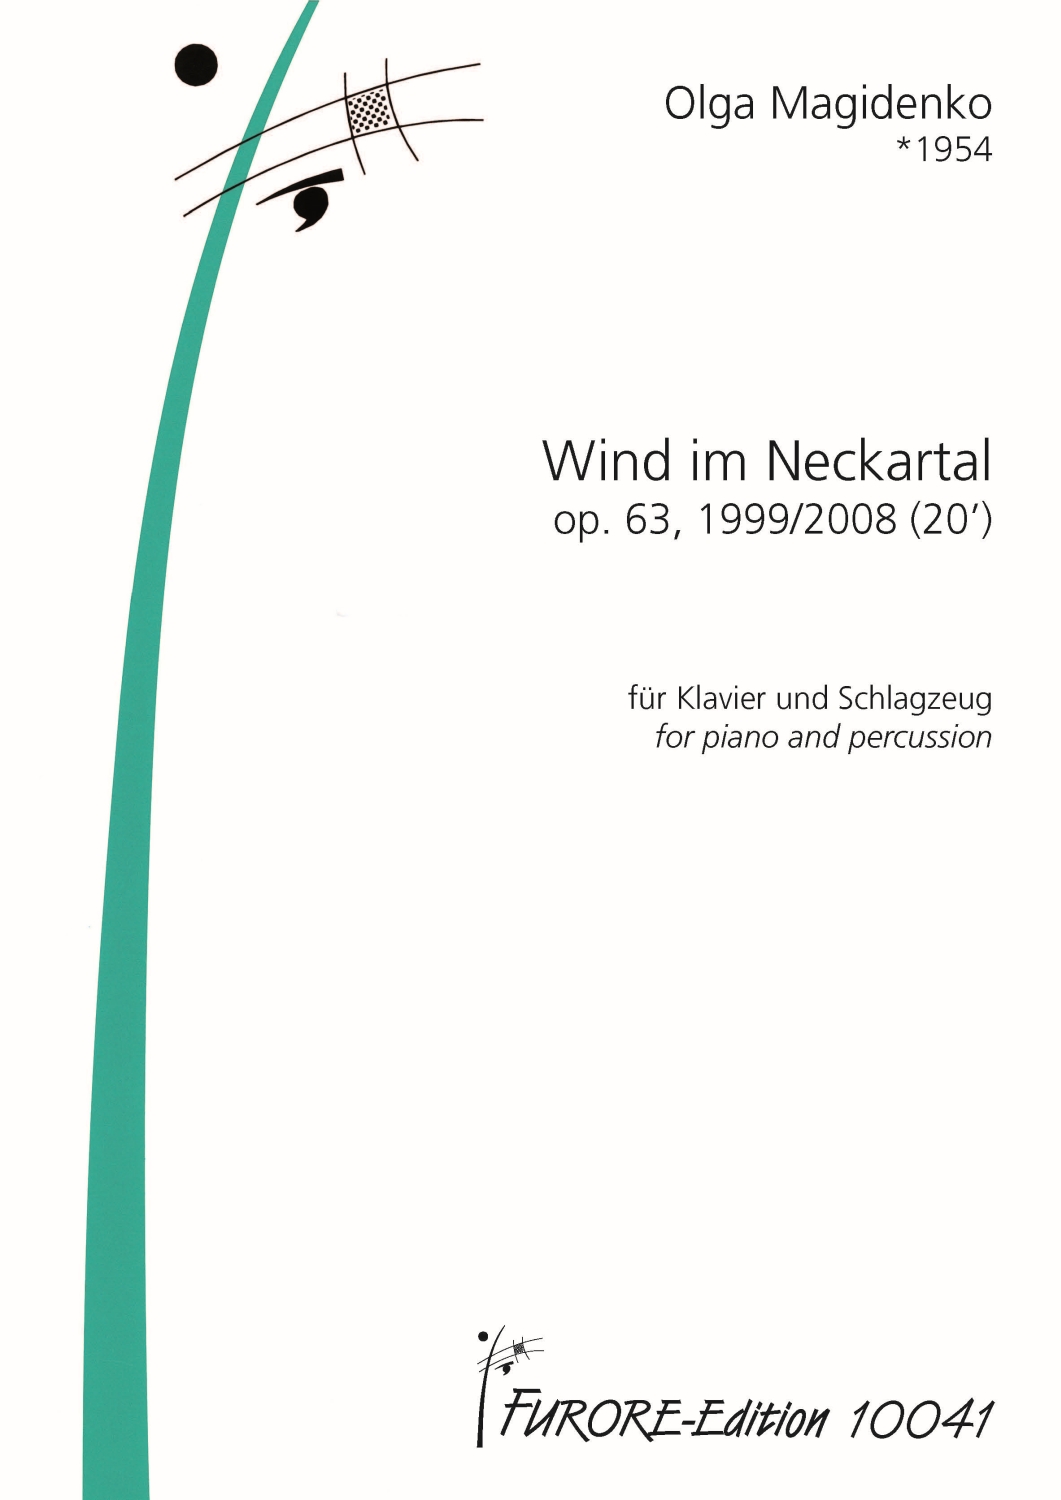 olga-magidenko-wind-im-neckartal-op-63-pno-schlz-__0001.JPG